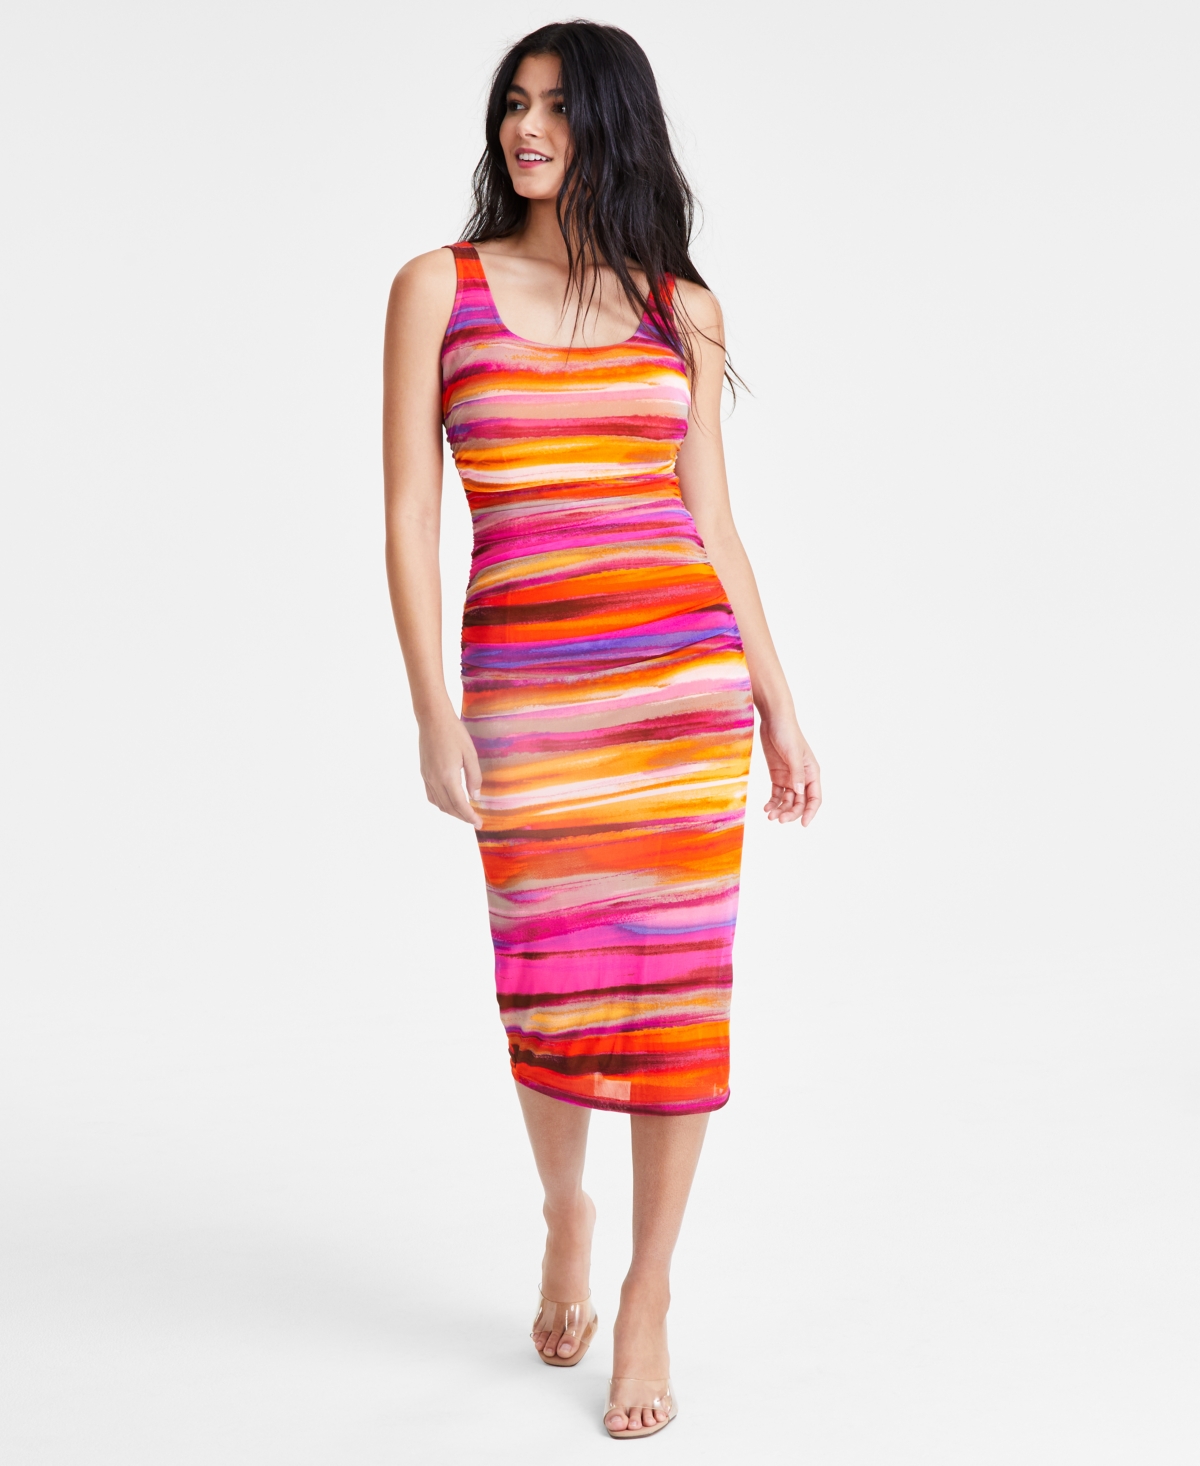 Women's Sleeveless Printed Mesh Midi Dress, Created for Macy's - Tangerine